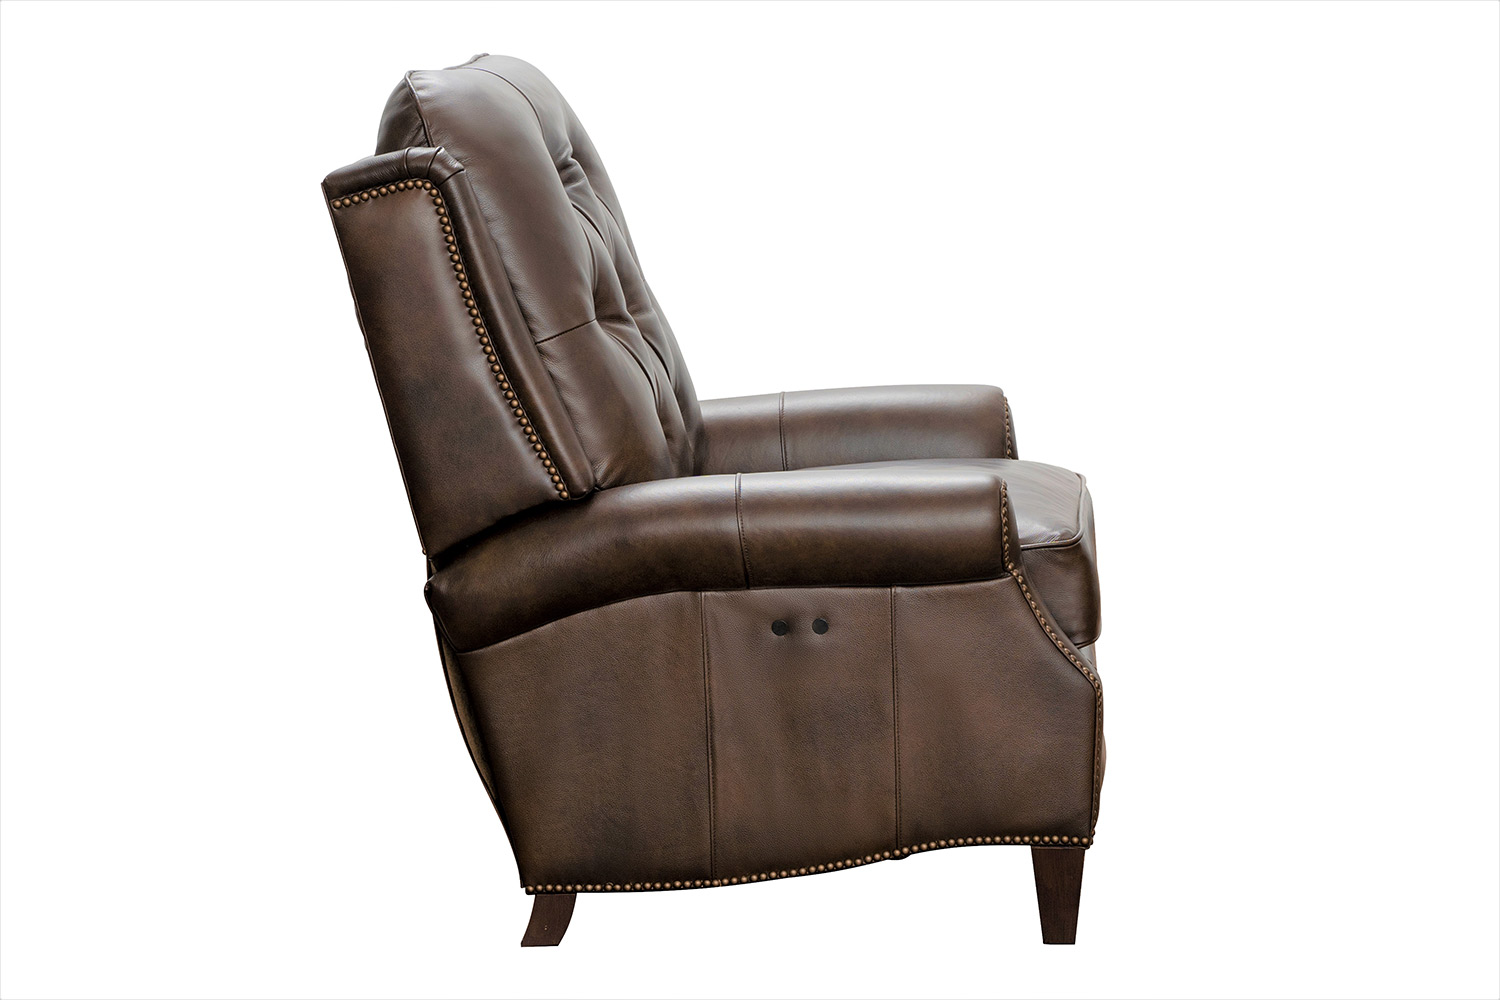 Barcalounger Ava Power Recliner Chair - Ashford Walnut/All Leather